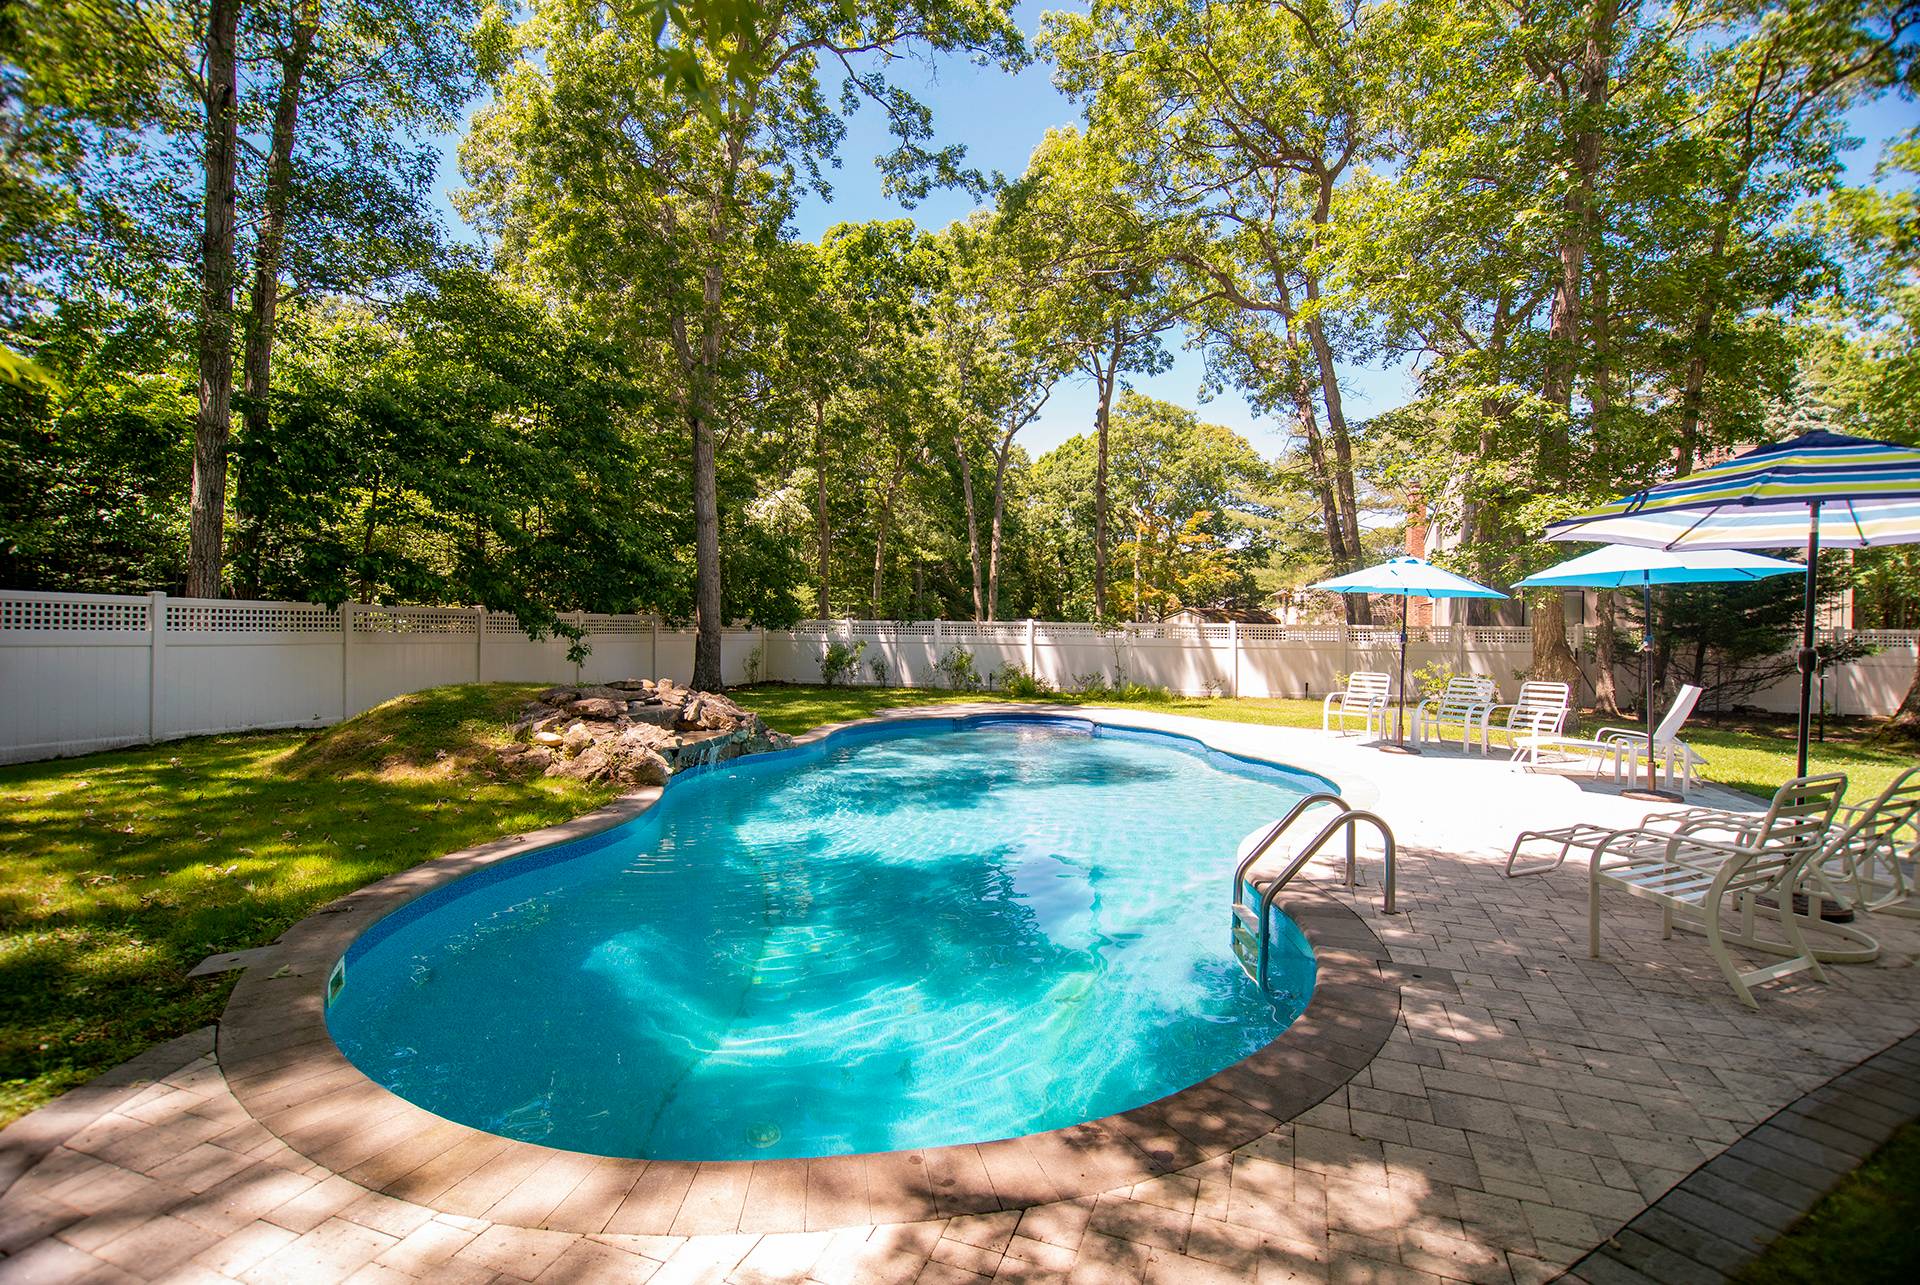 Rental Property at Springs, Springs, Hamptons, NY - Bedrooms: 2 
Bathrooms: 1  - $13,000 MO.